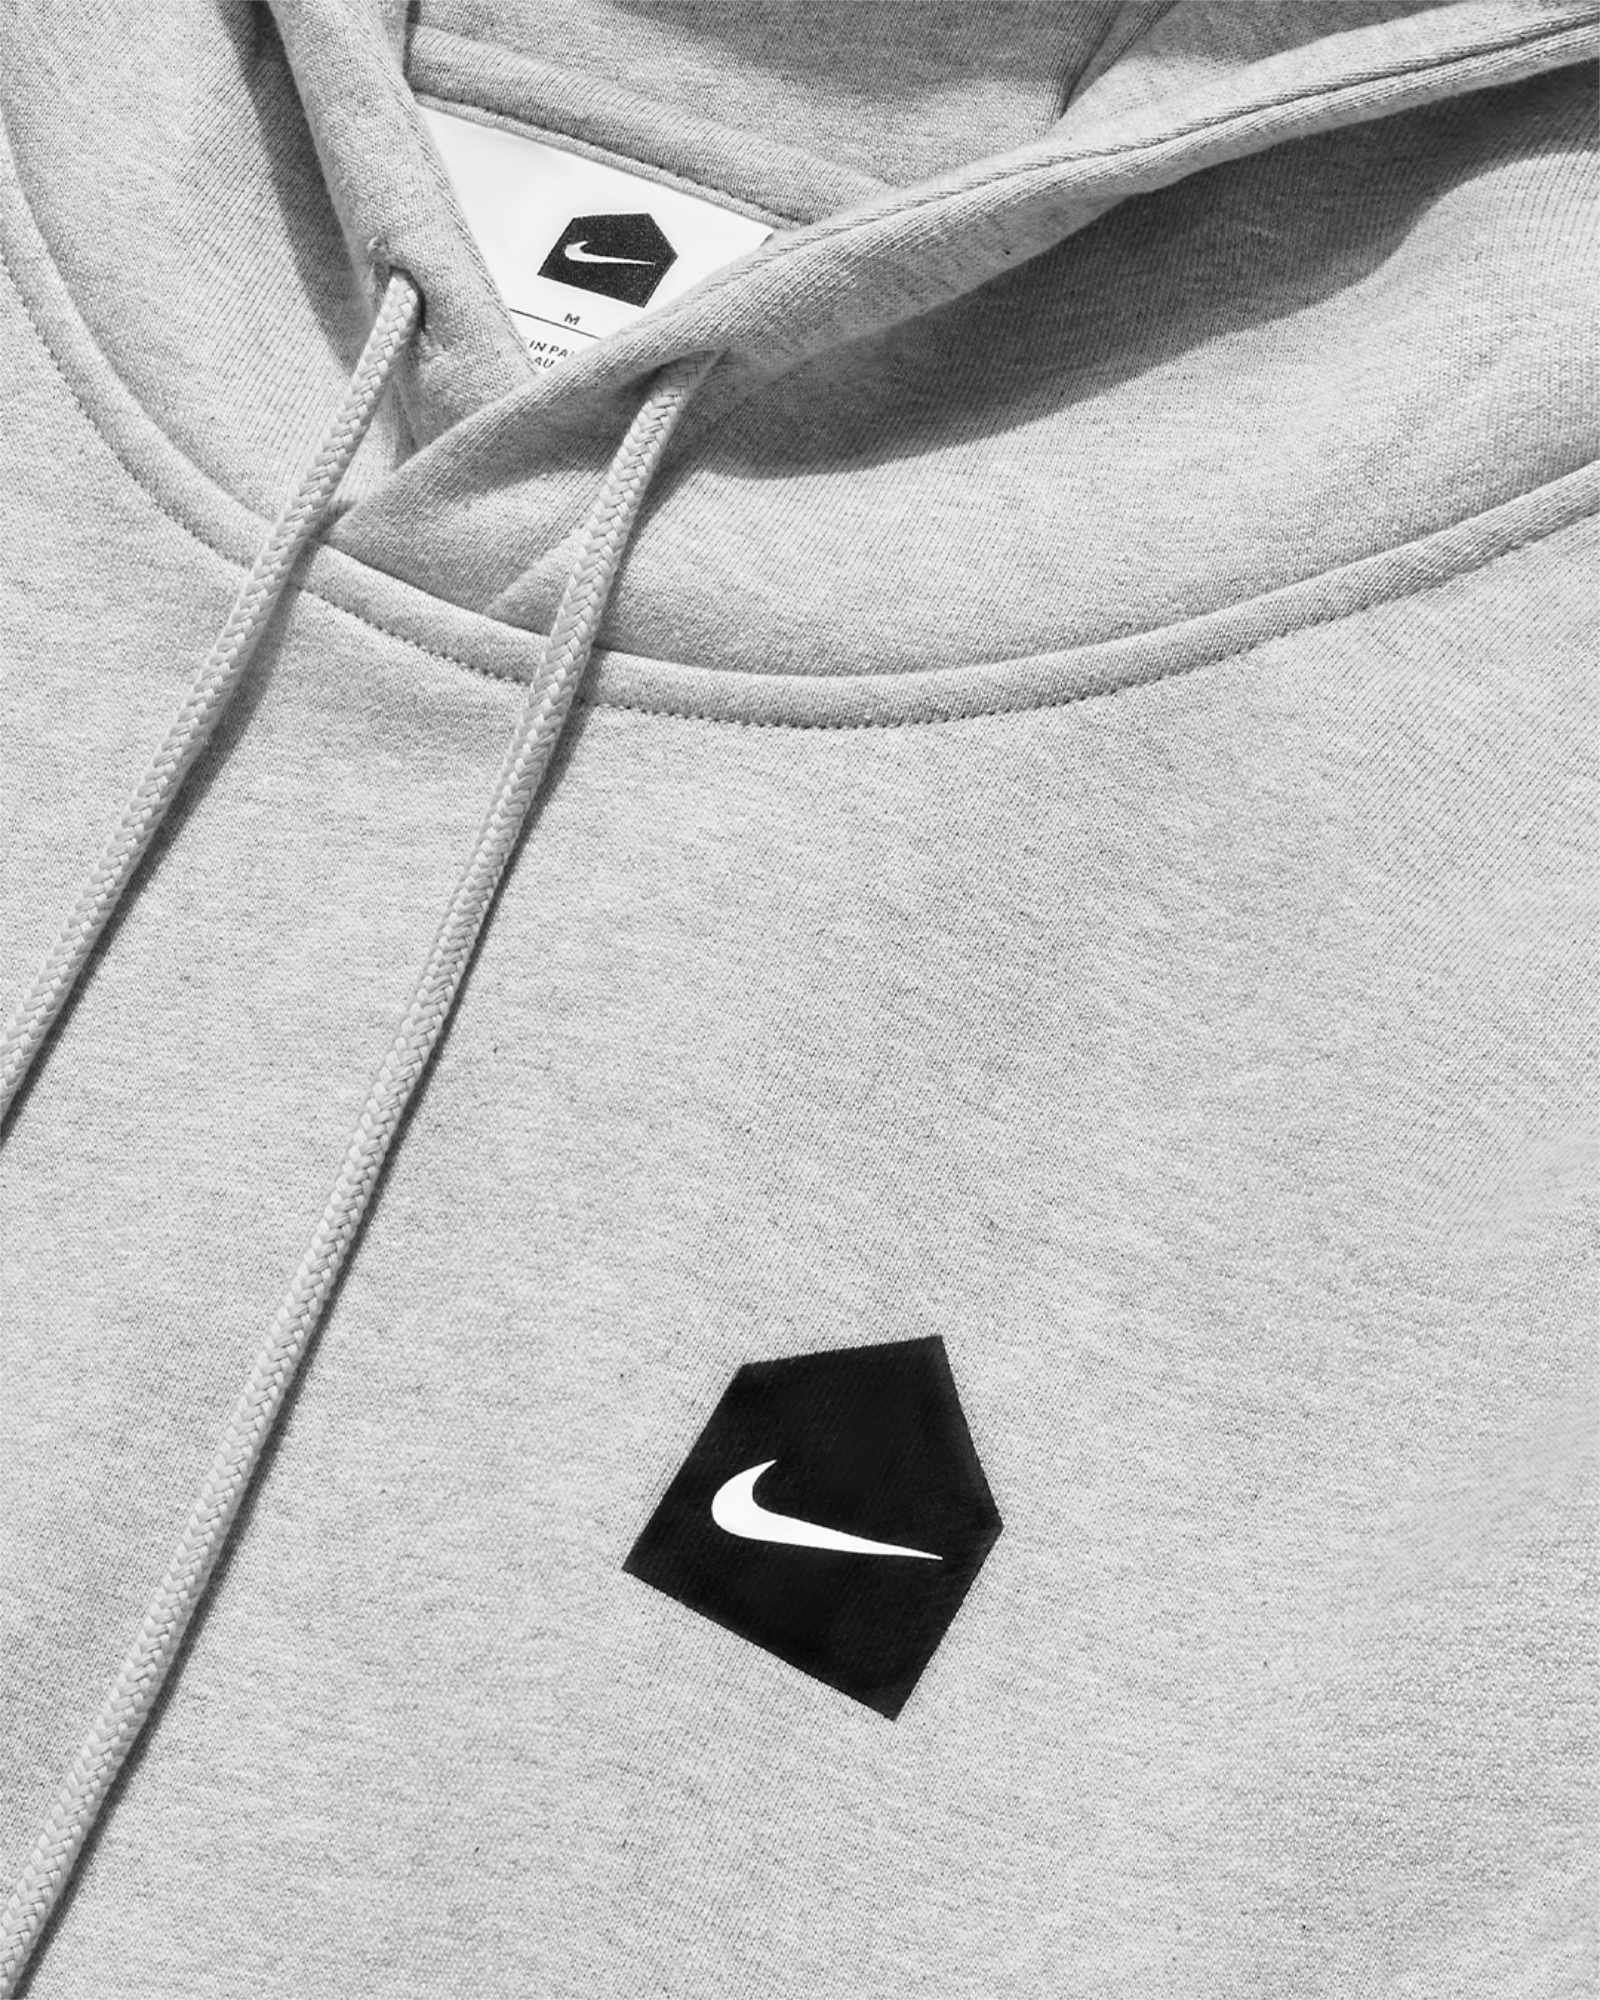 Nike & Dover Street Market's fleece sweats collab in grey, black, and navy